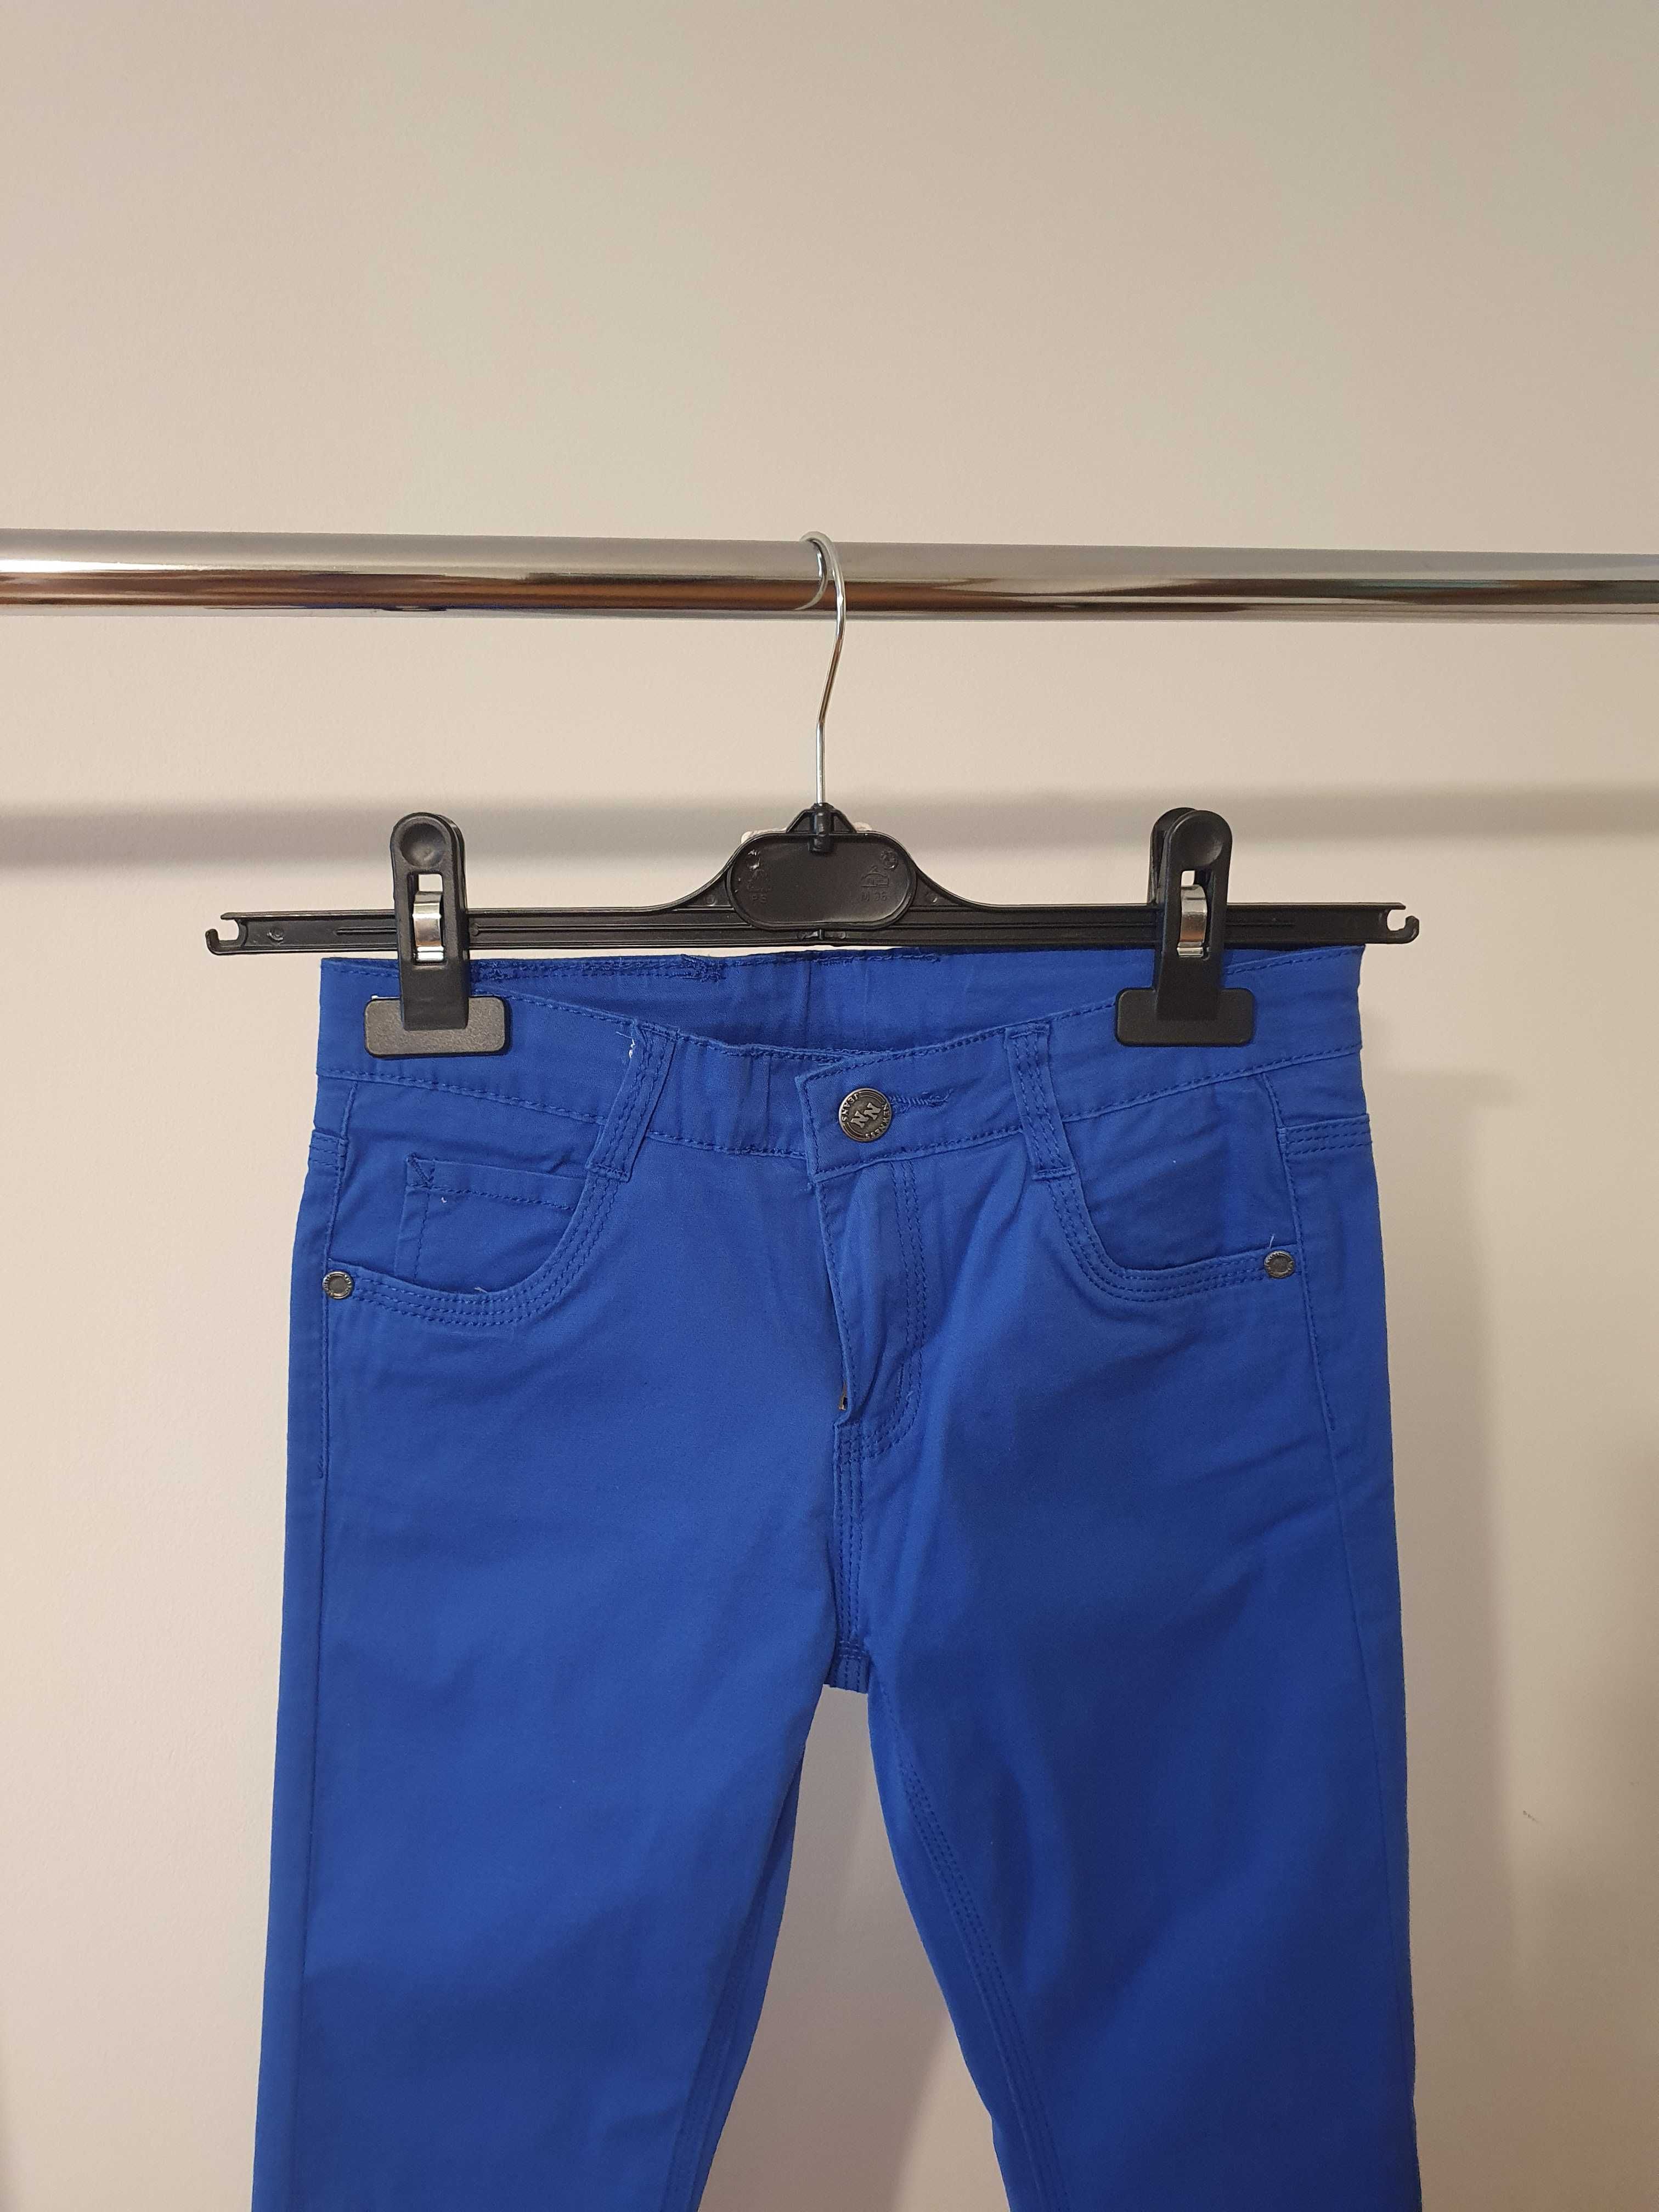 Pantaloni baieti Newness mar 7 ani (122 cm ) albastri